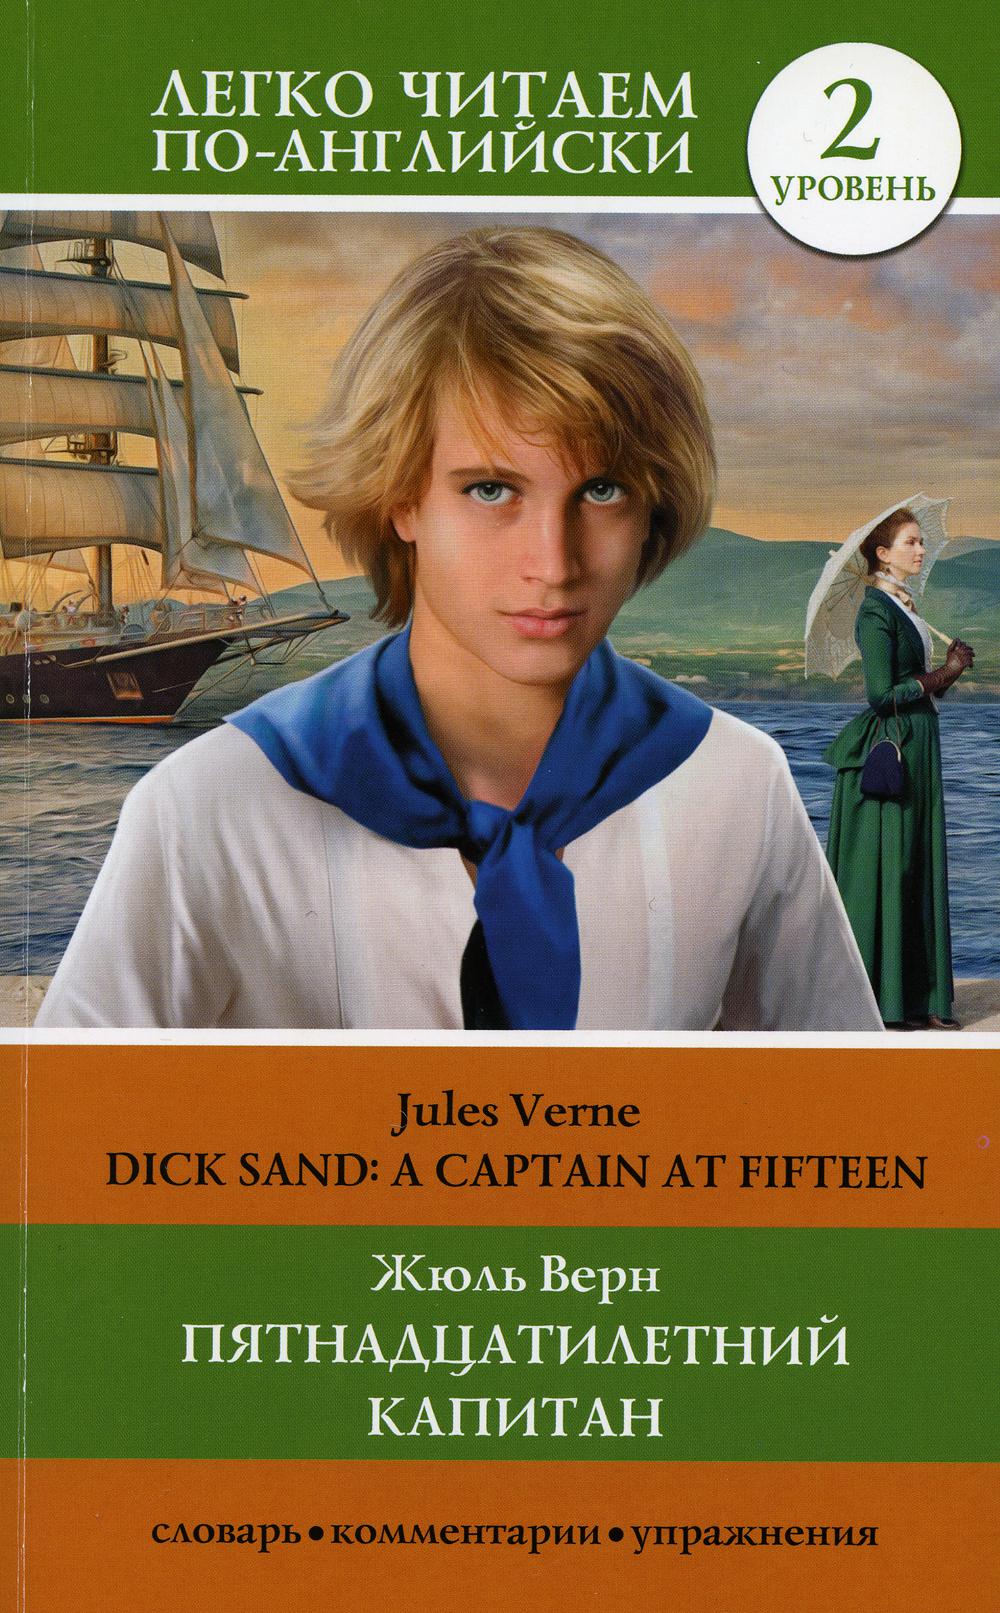 Пятнадцатилетний капитан = Dick sand: A captain at Fifteen: роман на англ.яз. Уровень 2